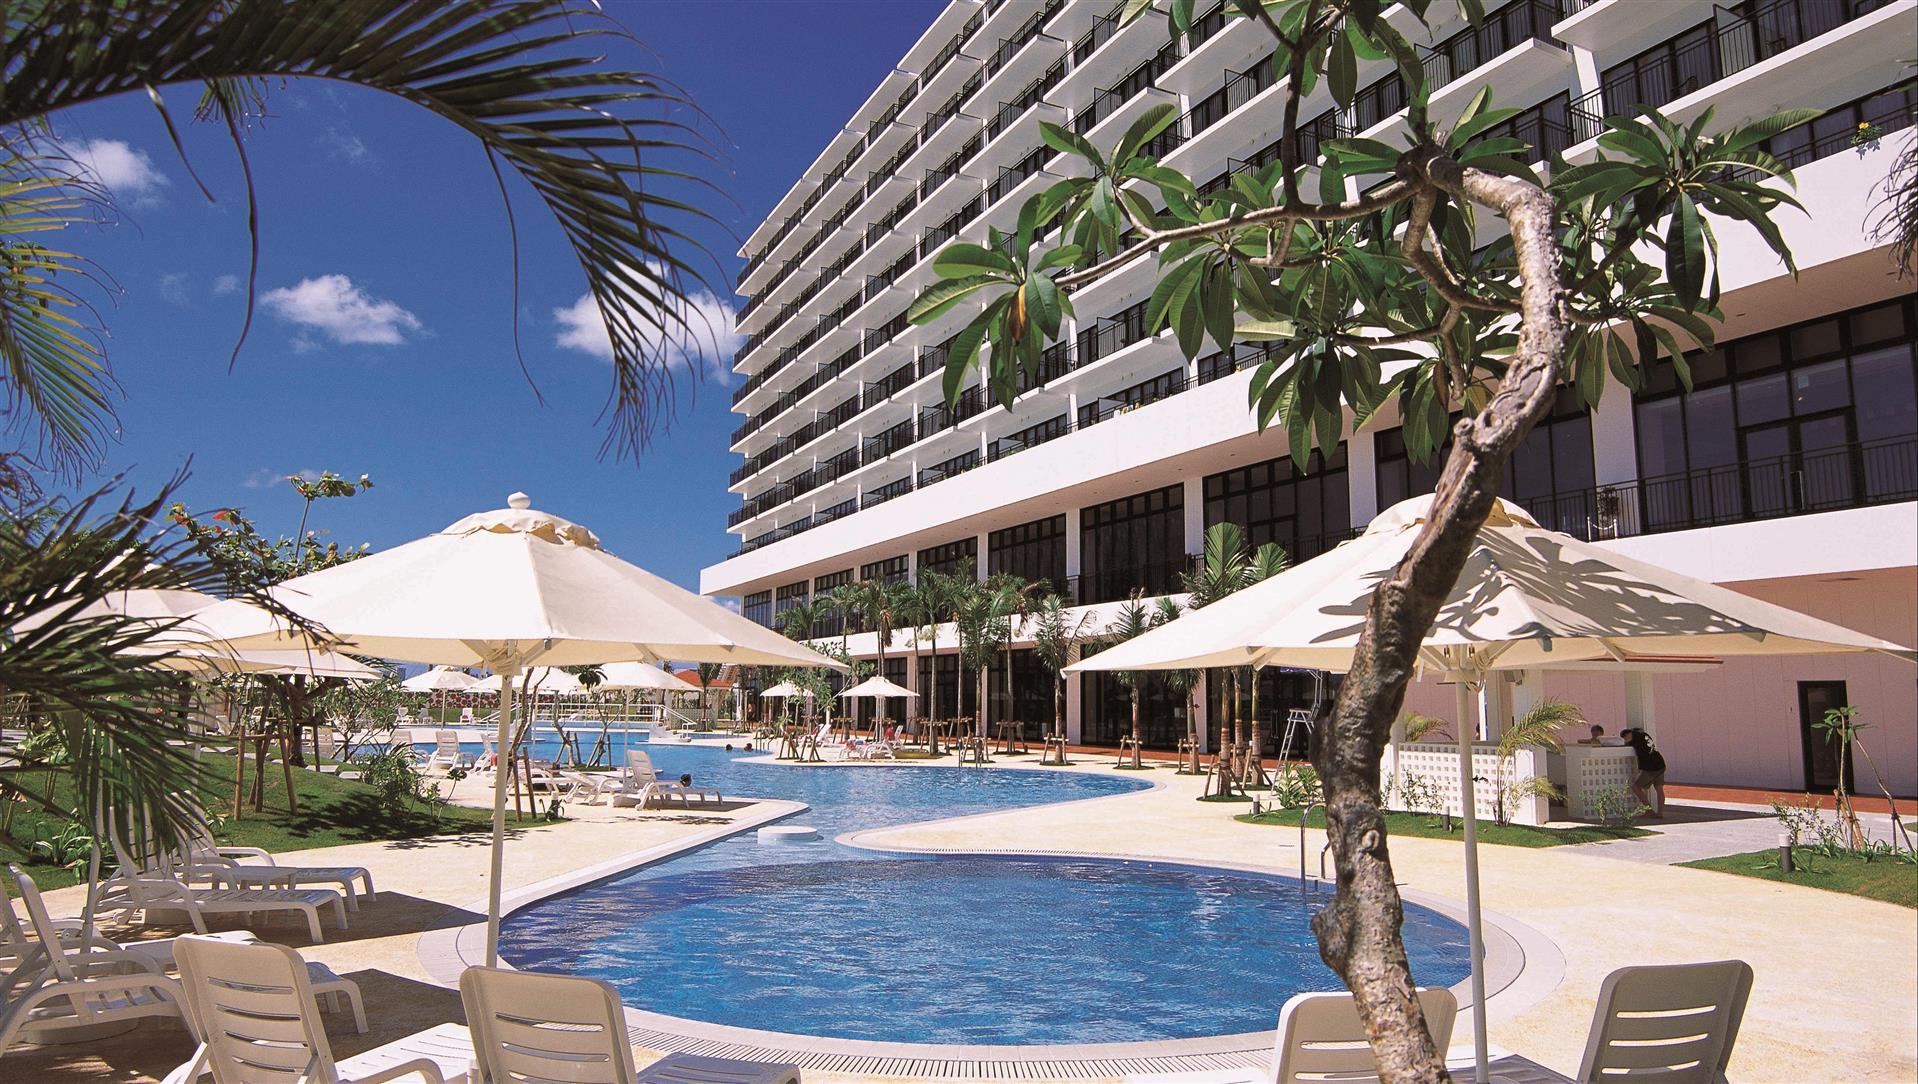 Southern Beach Hotel & Resort Okinawa in Itoman, JP